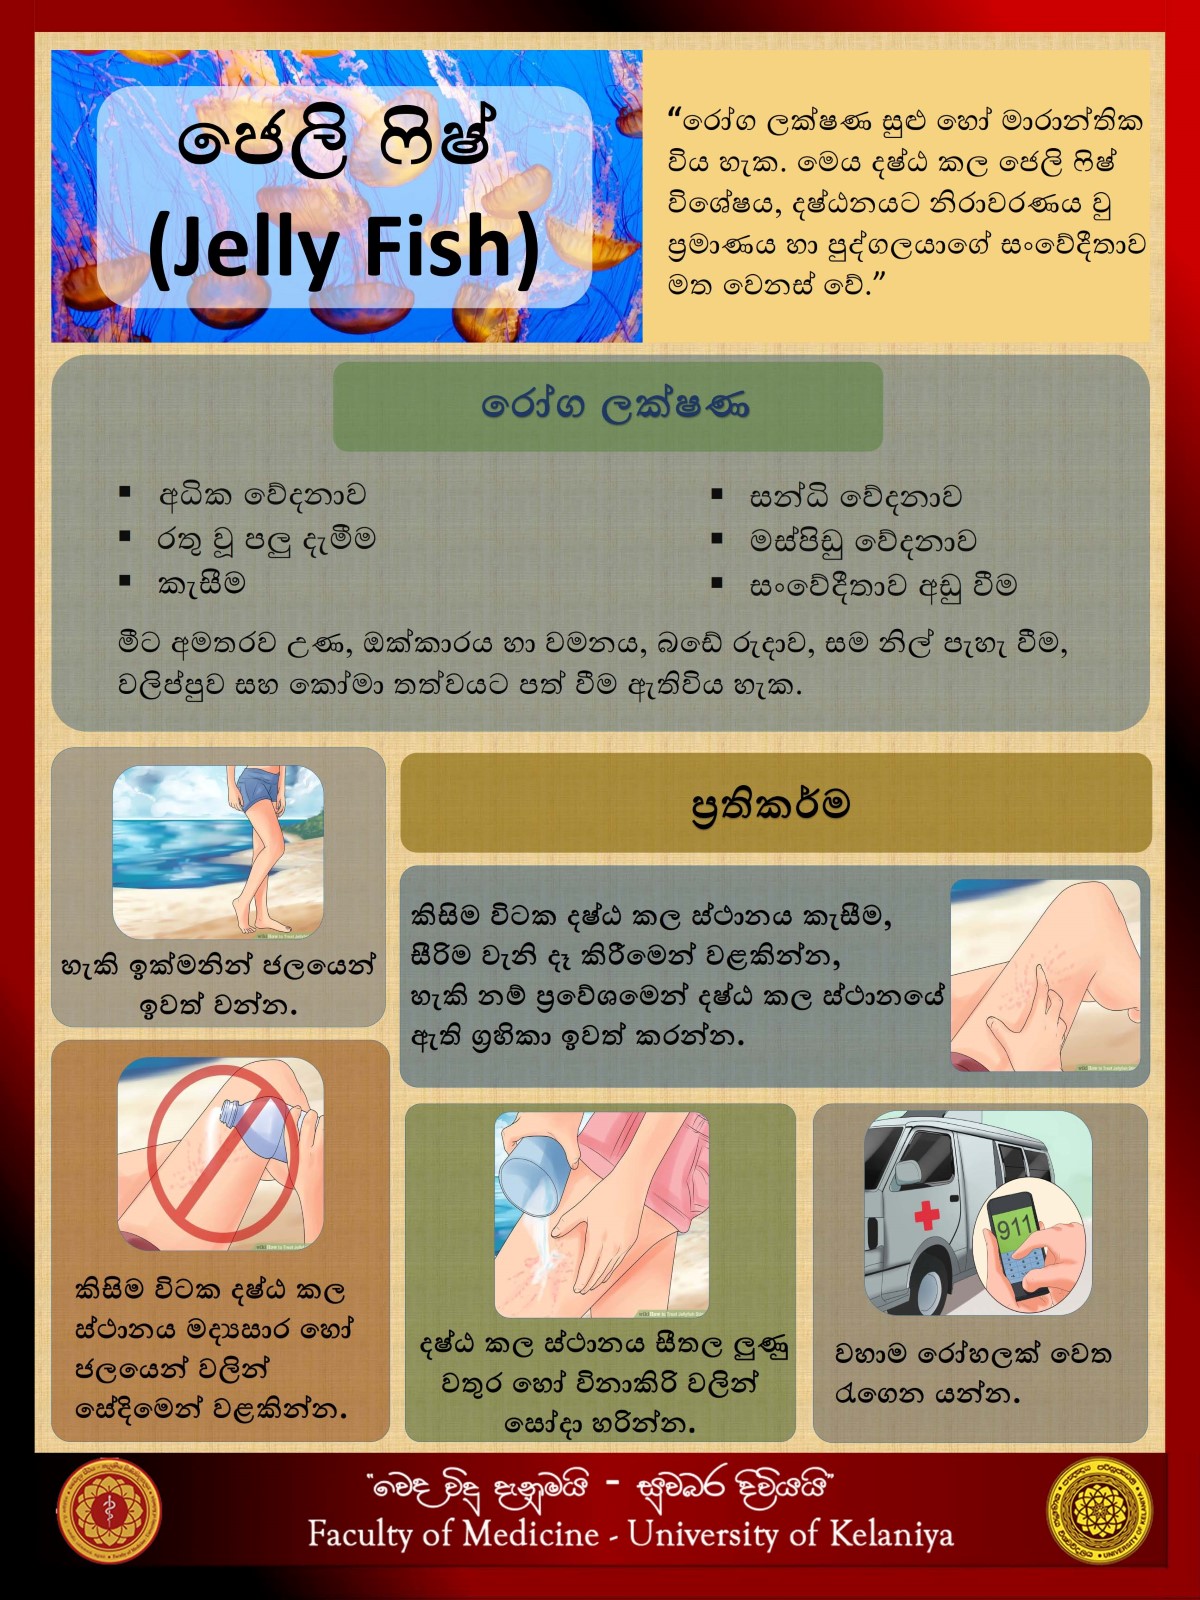 http://medicine.kln.ac.lk/vedavidudanuma/images/gallery/Trauma_Zone/Toxicology/JellyFish_001.jpg